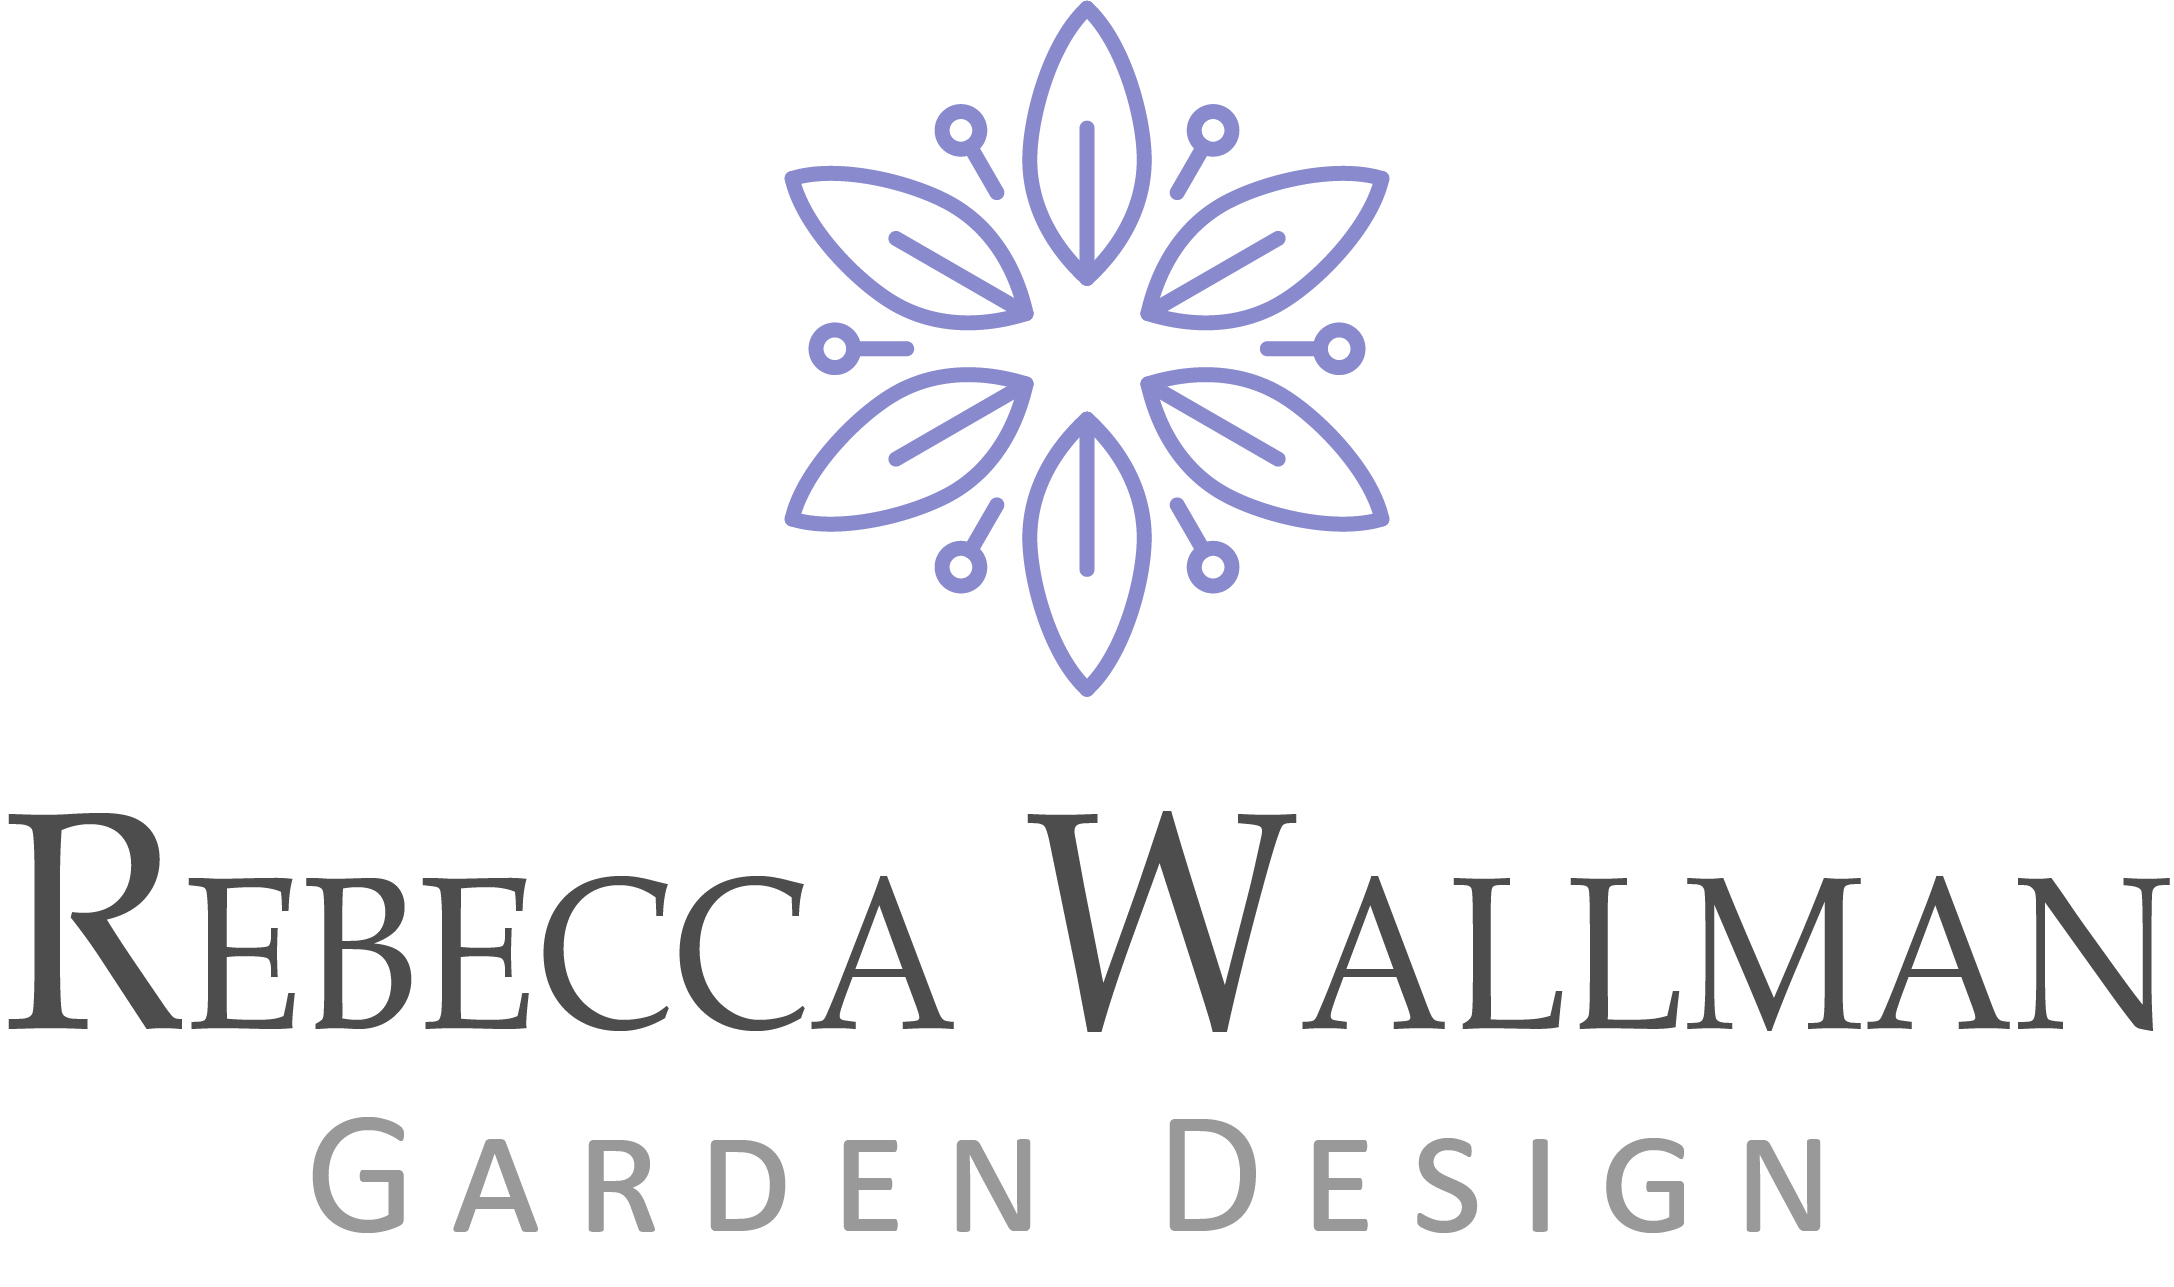 Rebecca Wallman Garden Design | Latest News